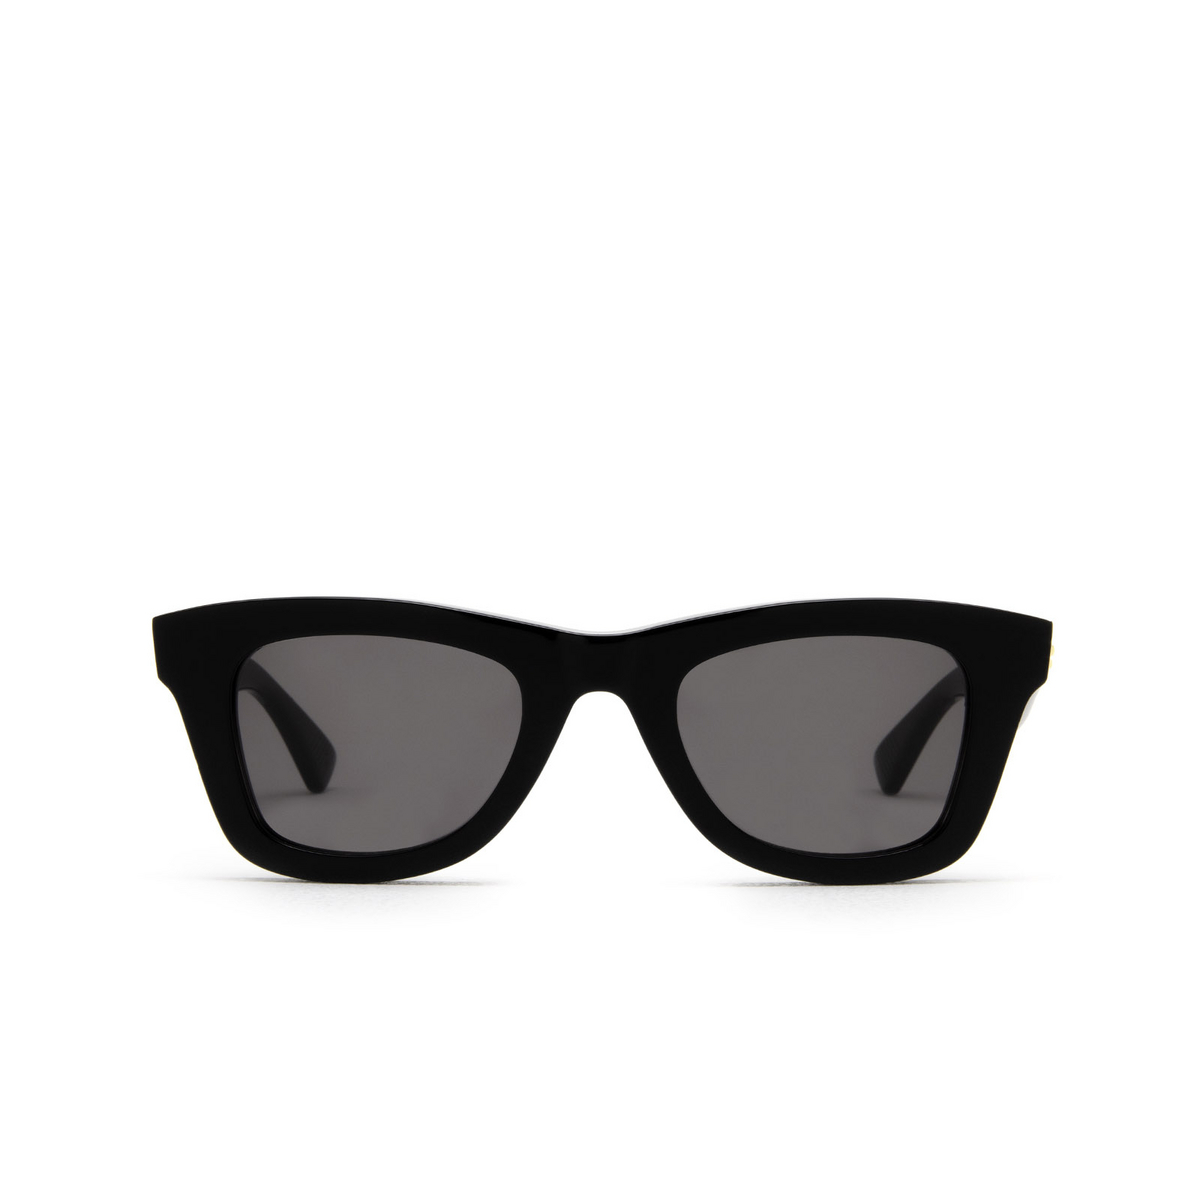 Bottega Veneta® Rectangle Sunglasses: BV1147S color Black 001 - front view.